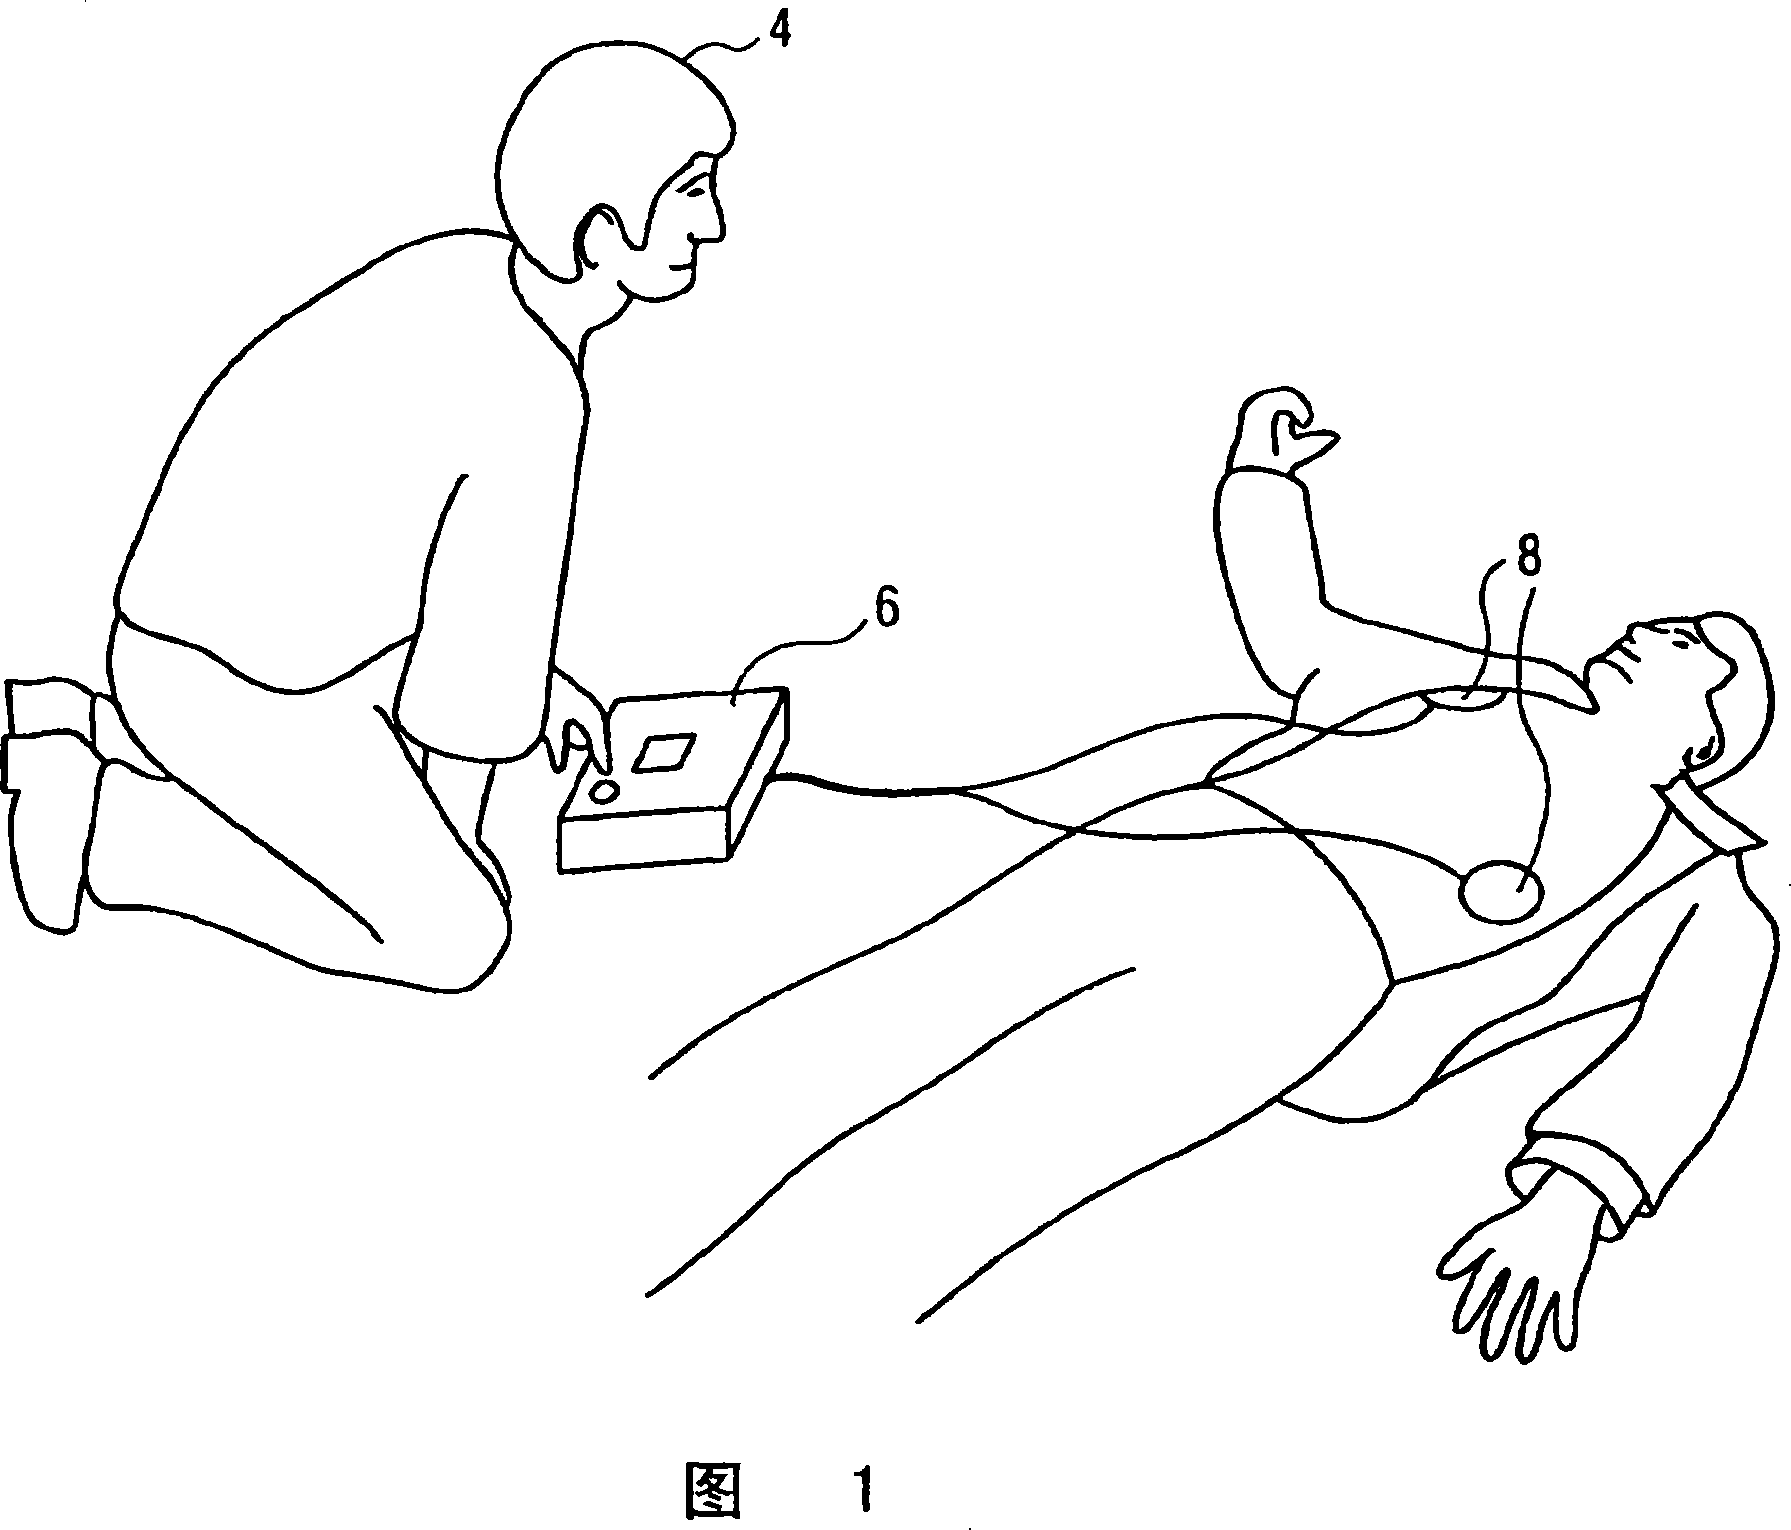 External defibrillator with pre-cpr-ecg based defibrillating shock